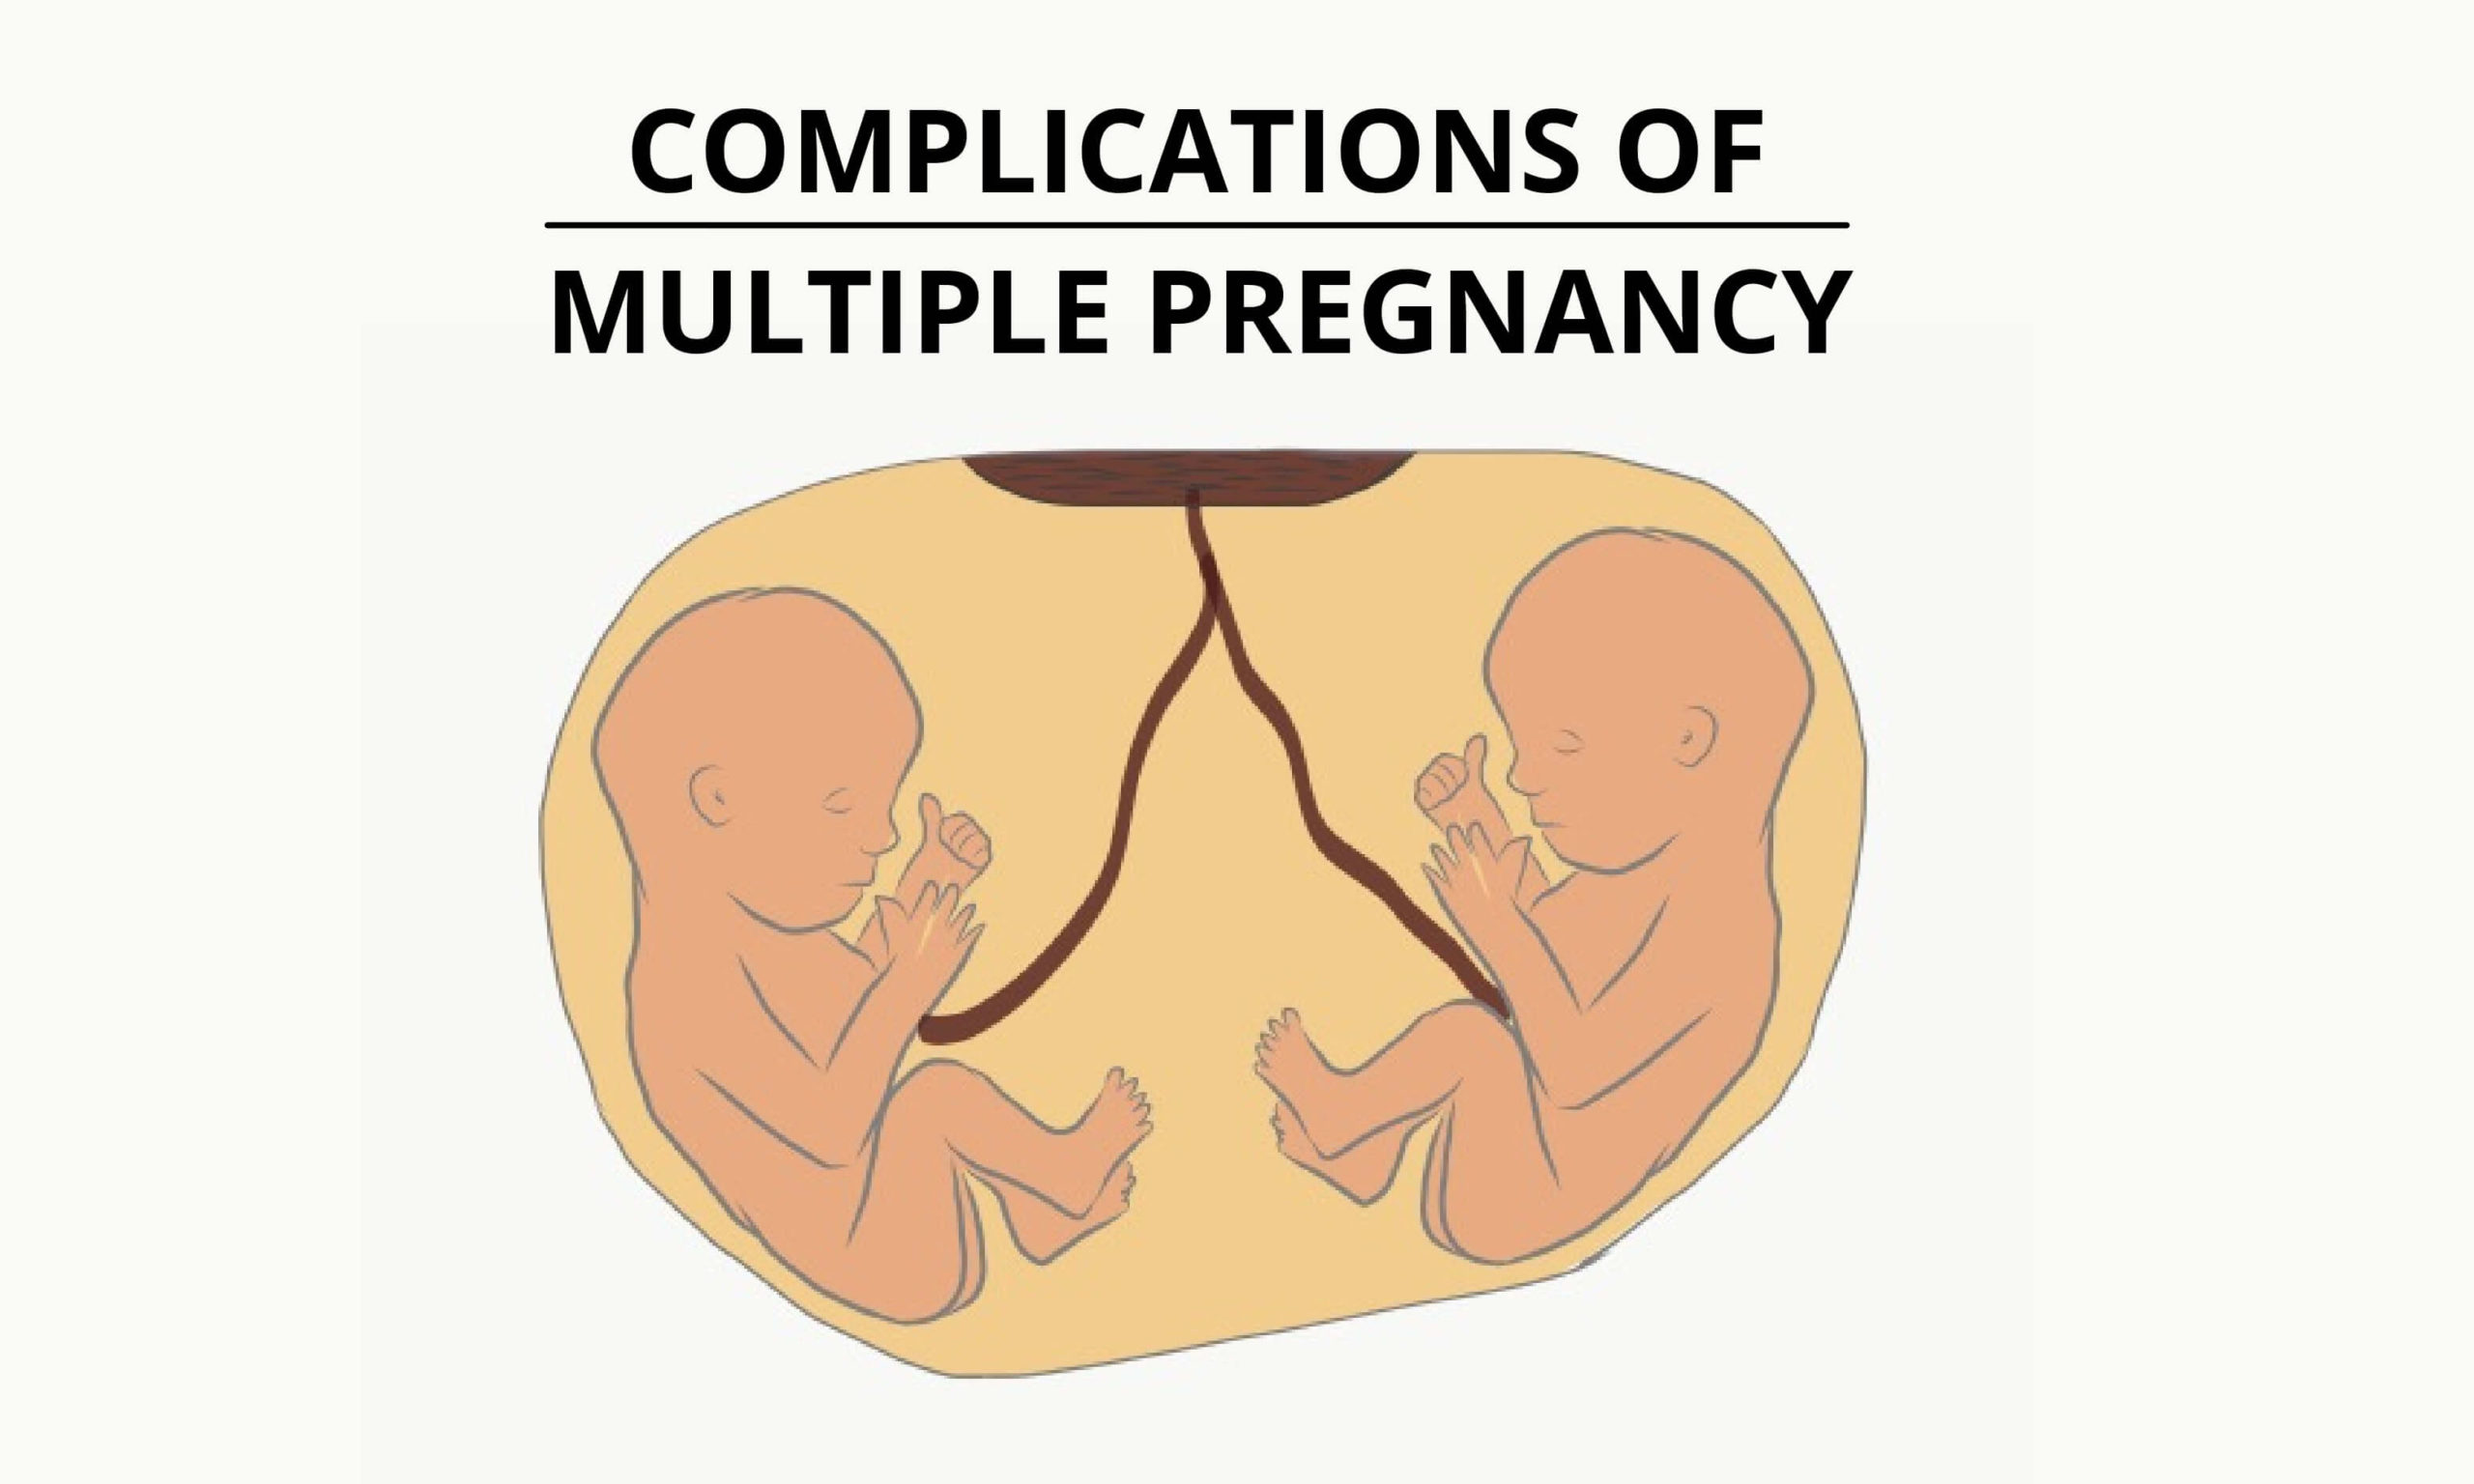 case study on multiple pregnancy